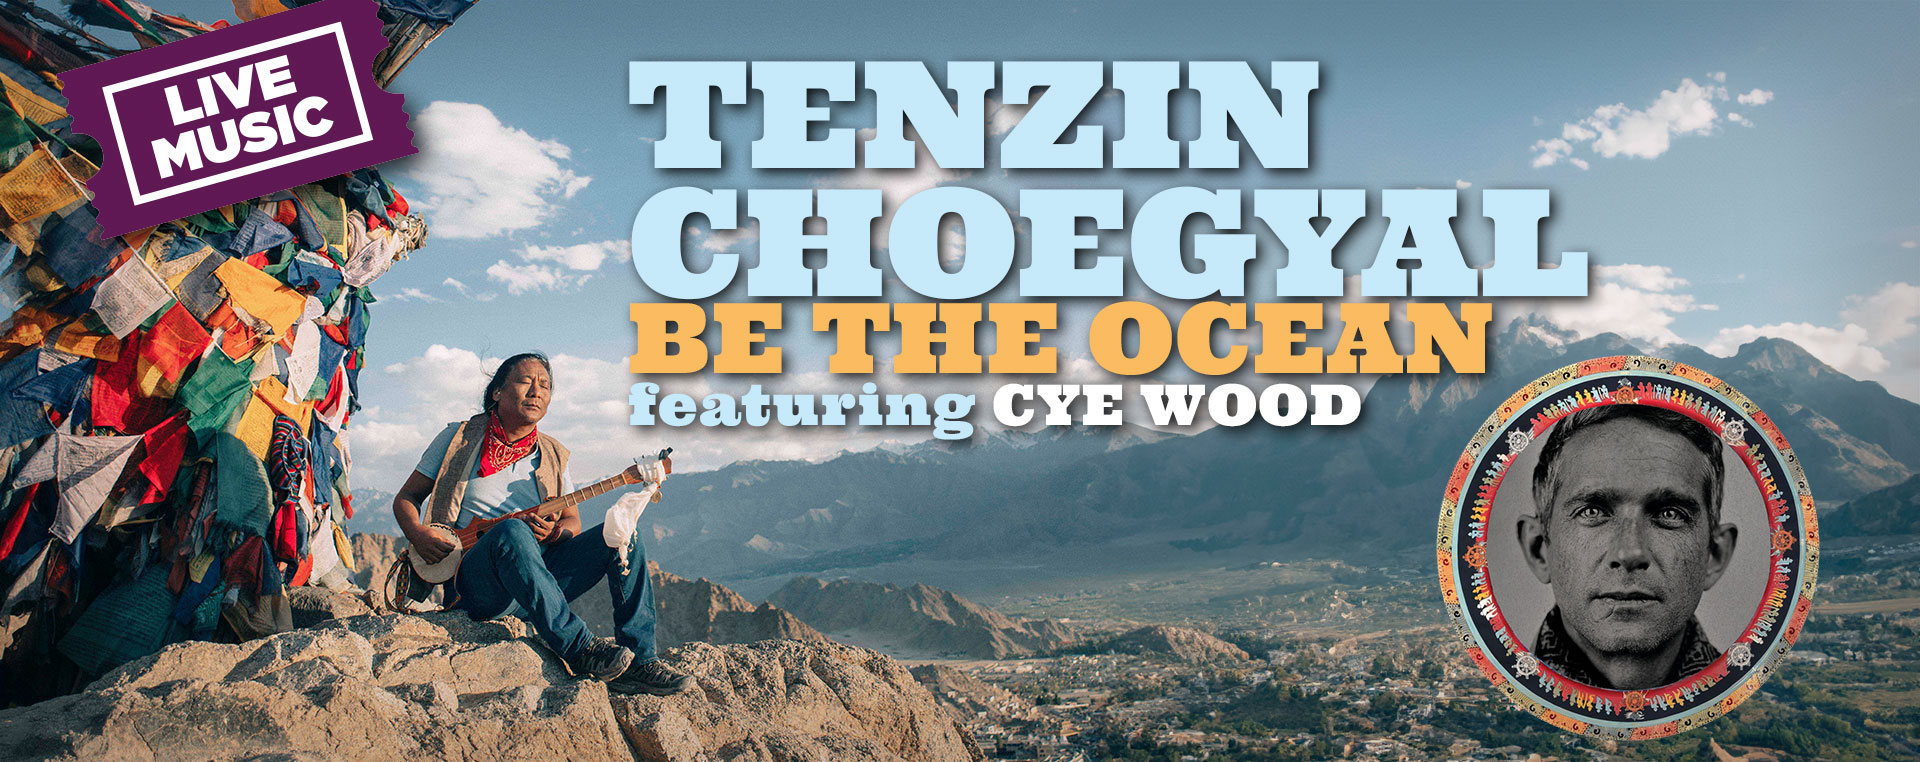 Tenzin Choegyal featuring Cye Wood 5 Nov